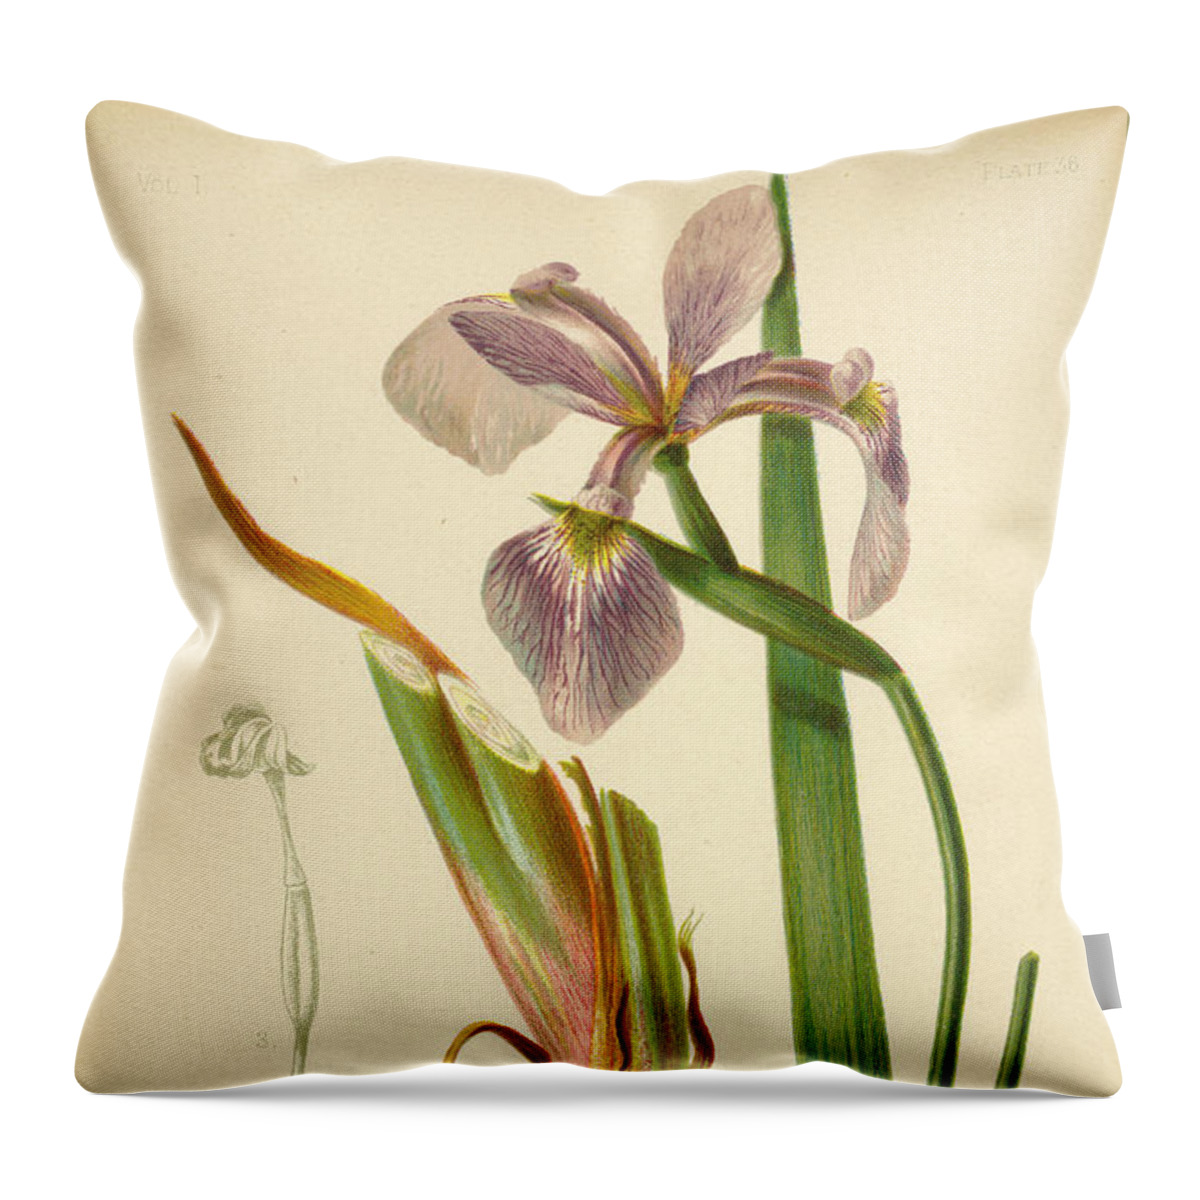 Iris Throw Pillow featuring the mixed media Iris Versicolor Blue Flag by L Prang